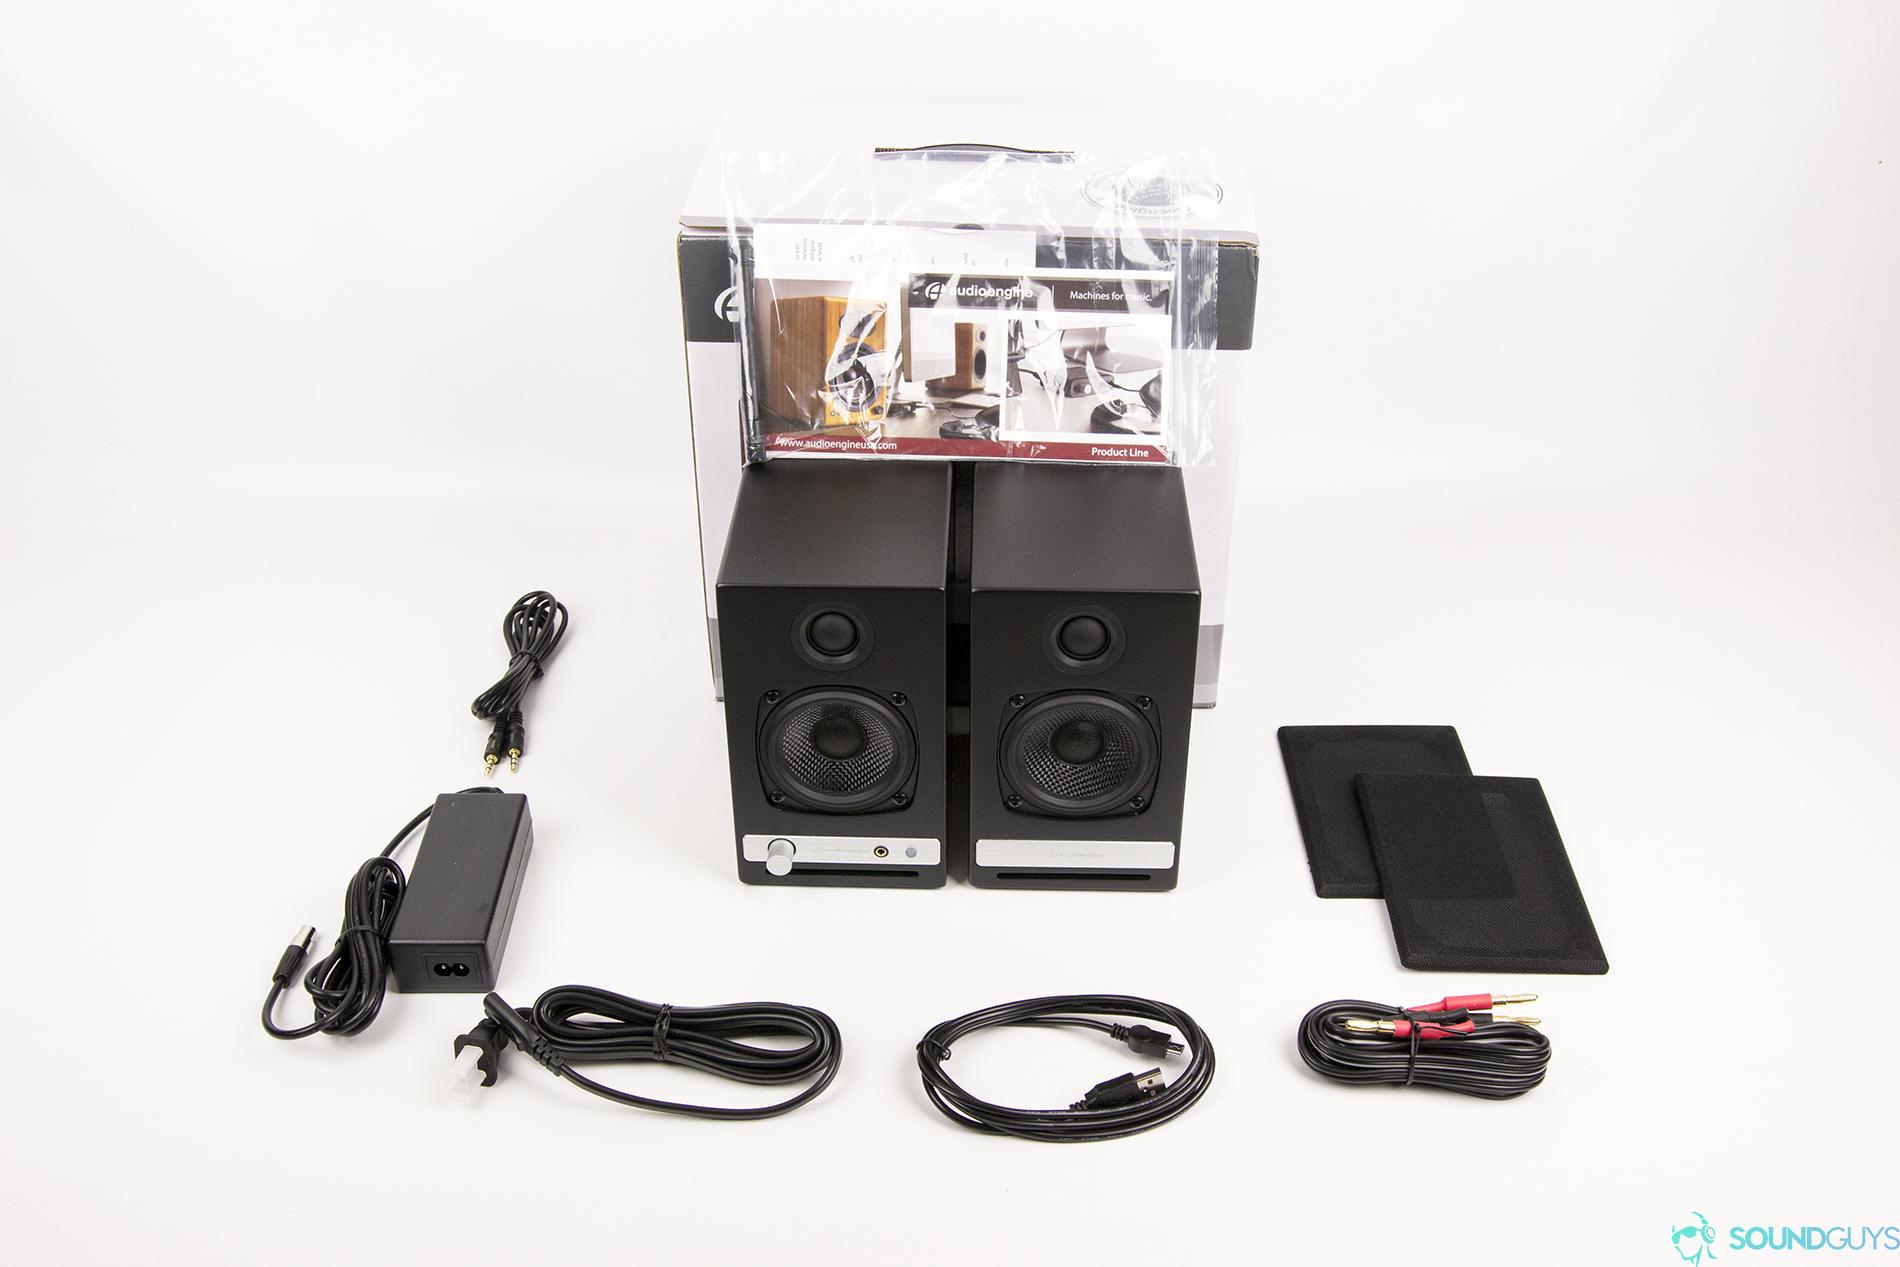 Audioengine HD3 Speakers review: Excellent Hi-Fi Audio